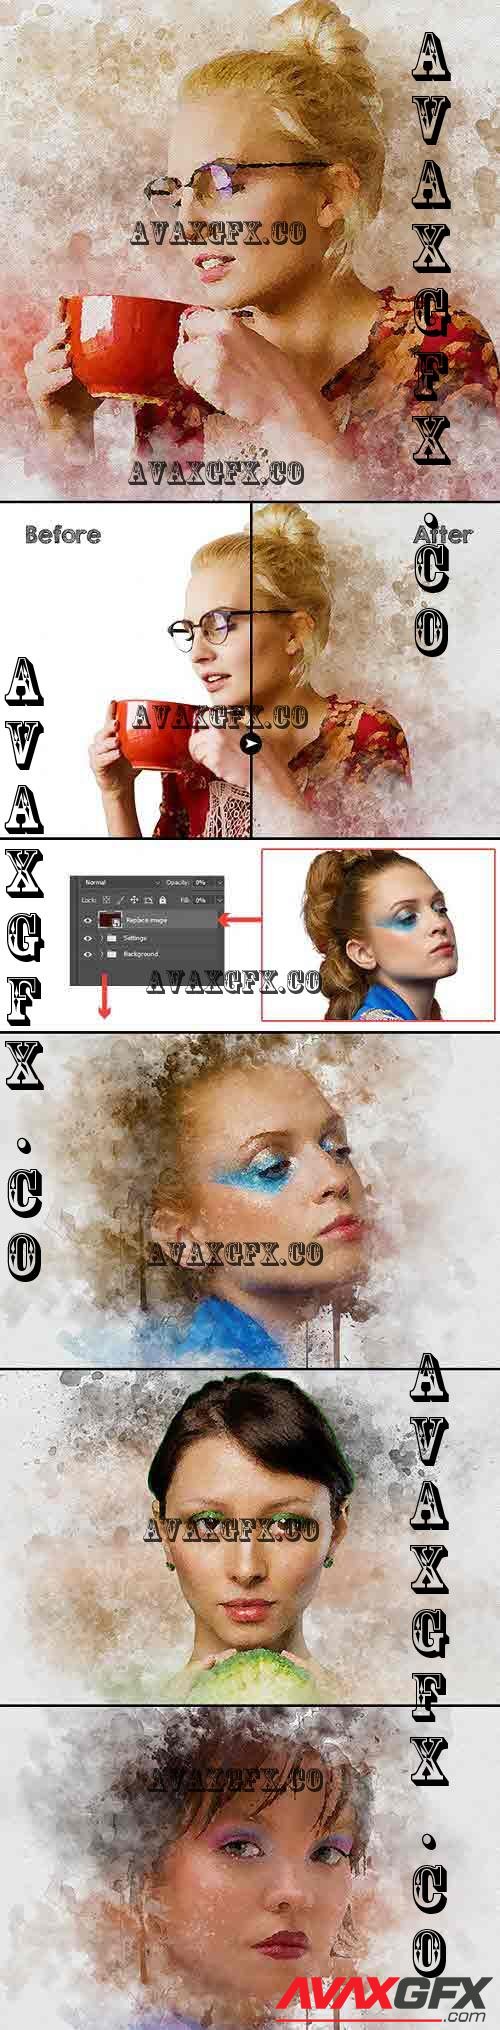 Watercolor Effect Photoshop - 41977108